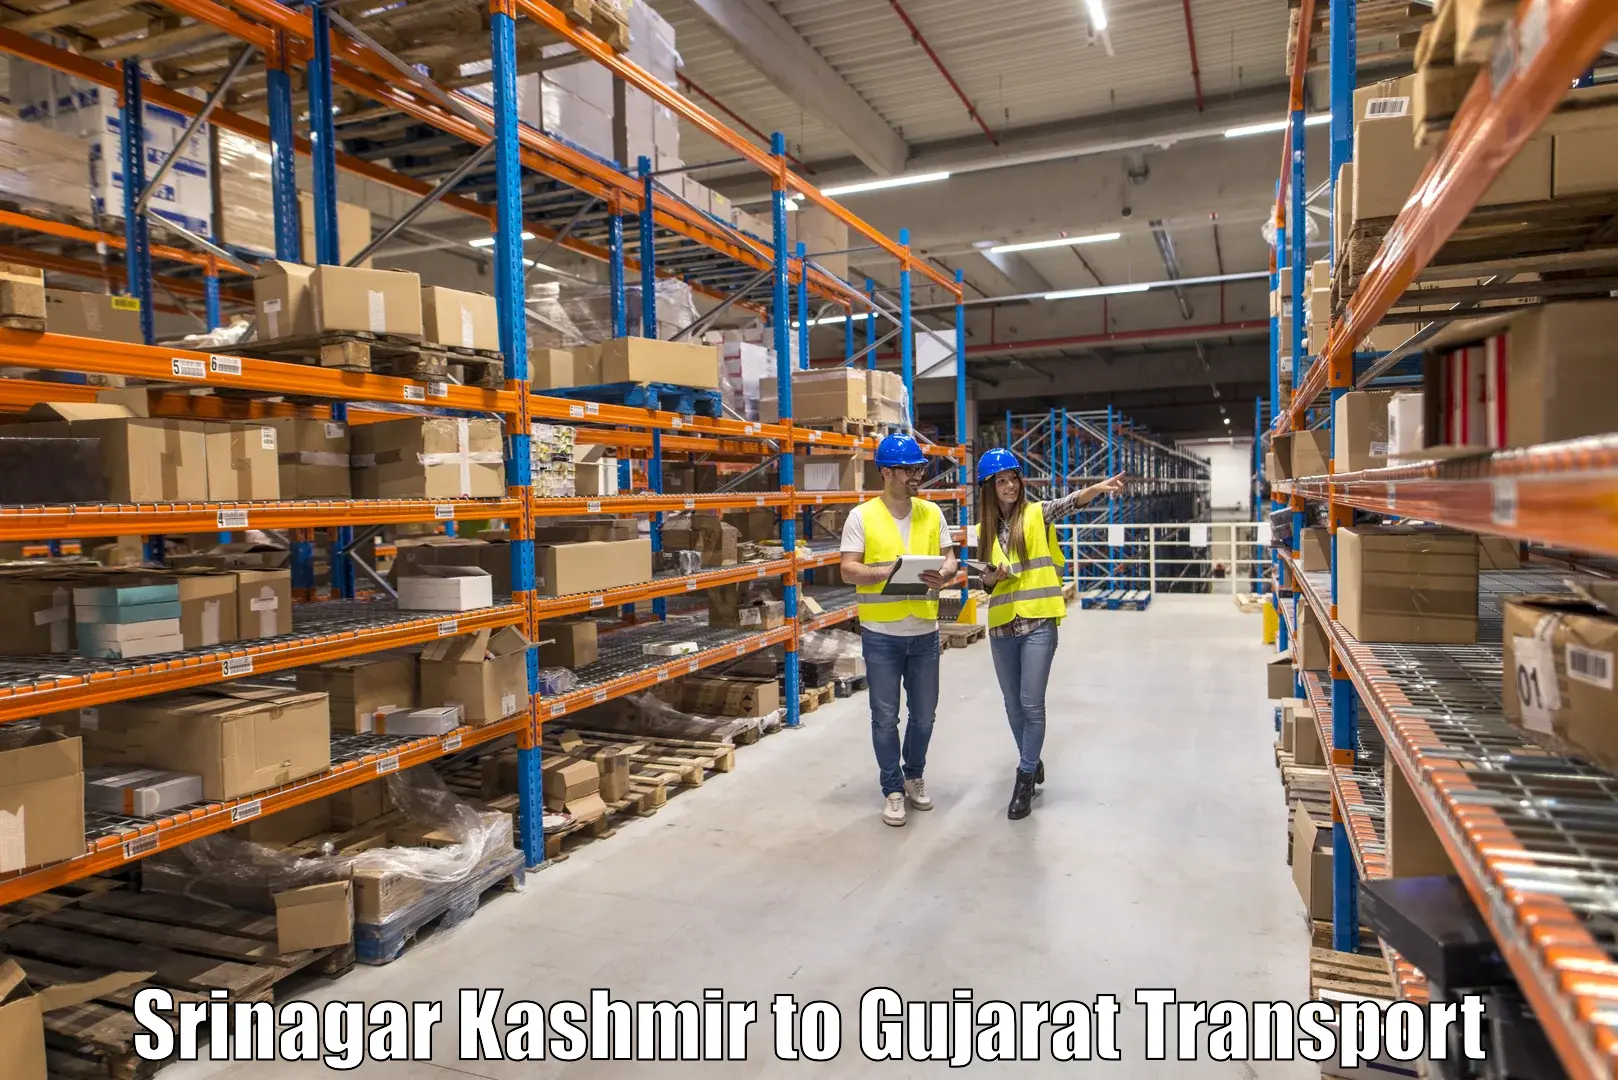 Truck transport companies in India Srinagar Kashmir to Ahwa